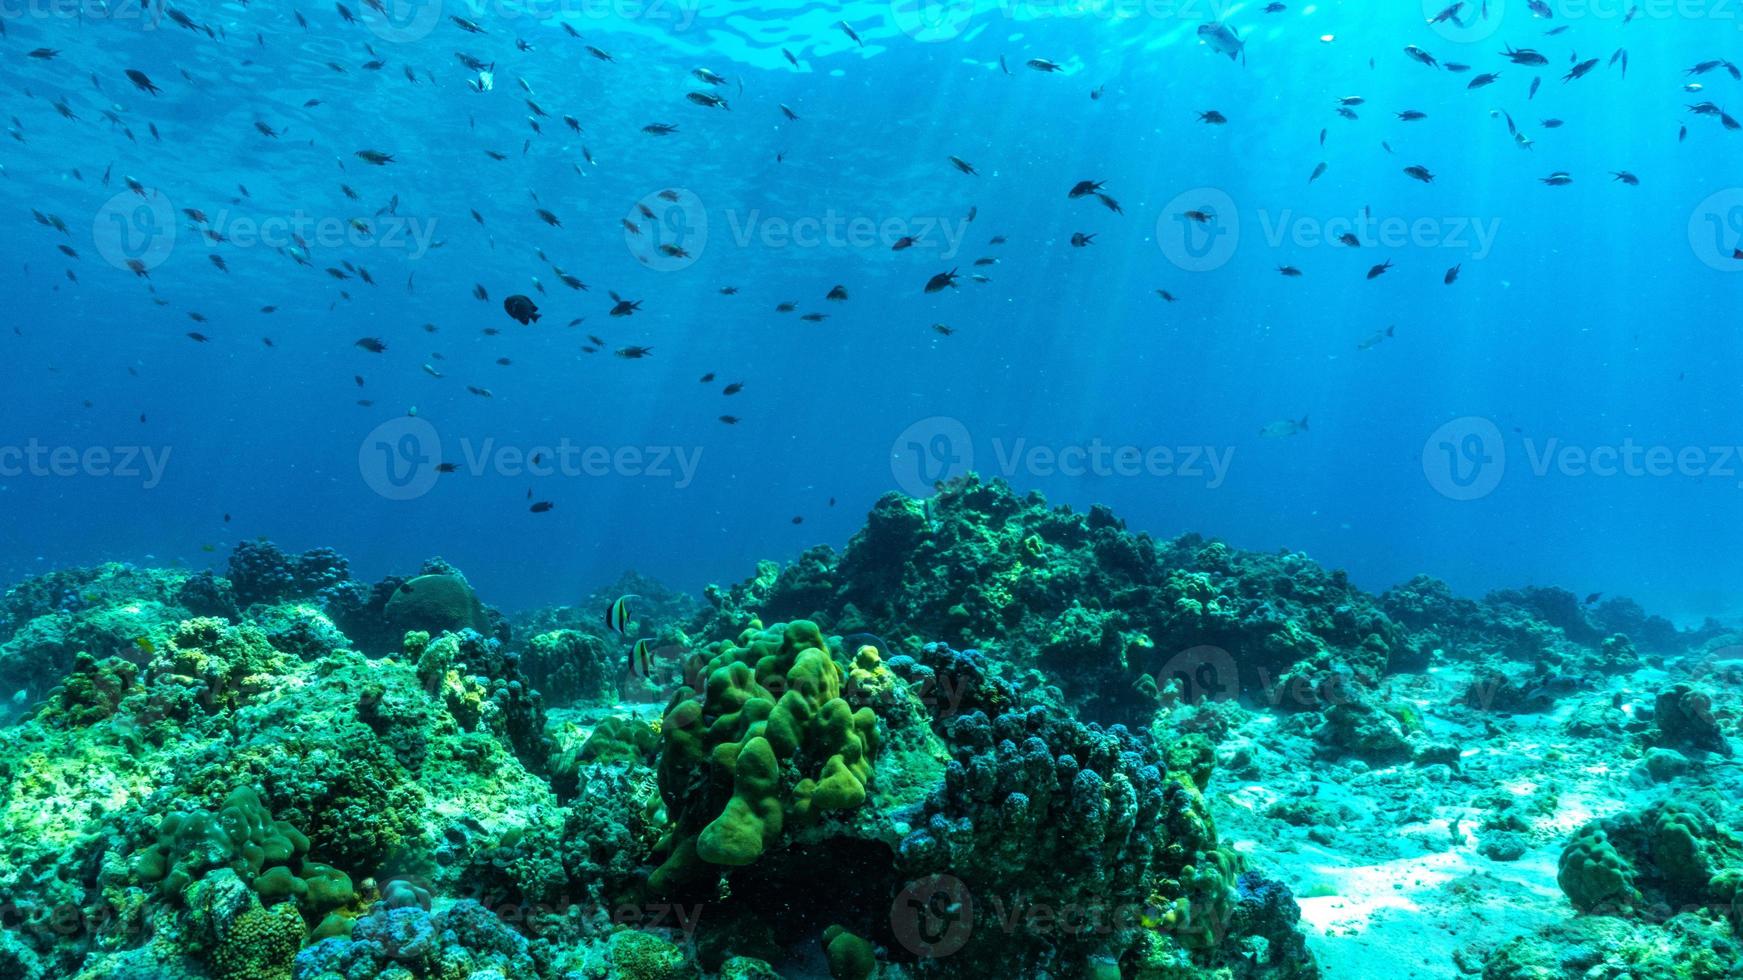 onderwaterscène met koraalrif en vissen. foto